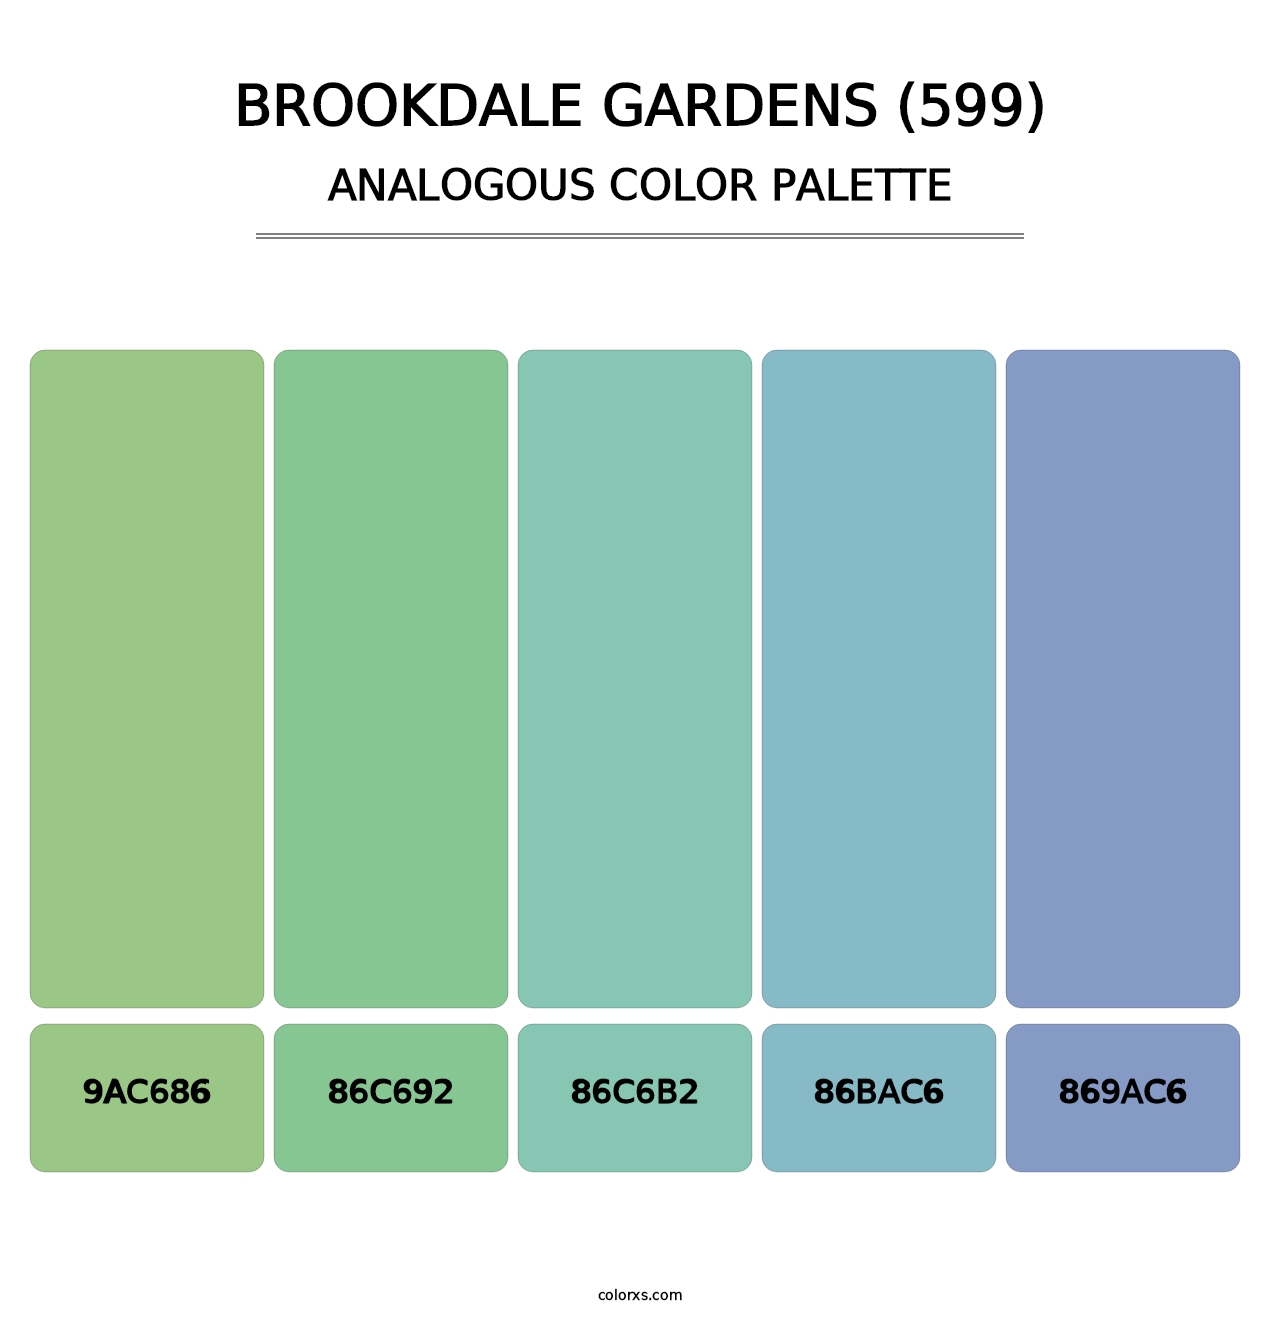 Brookdale Gardens (599) - Analogous Color Palette